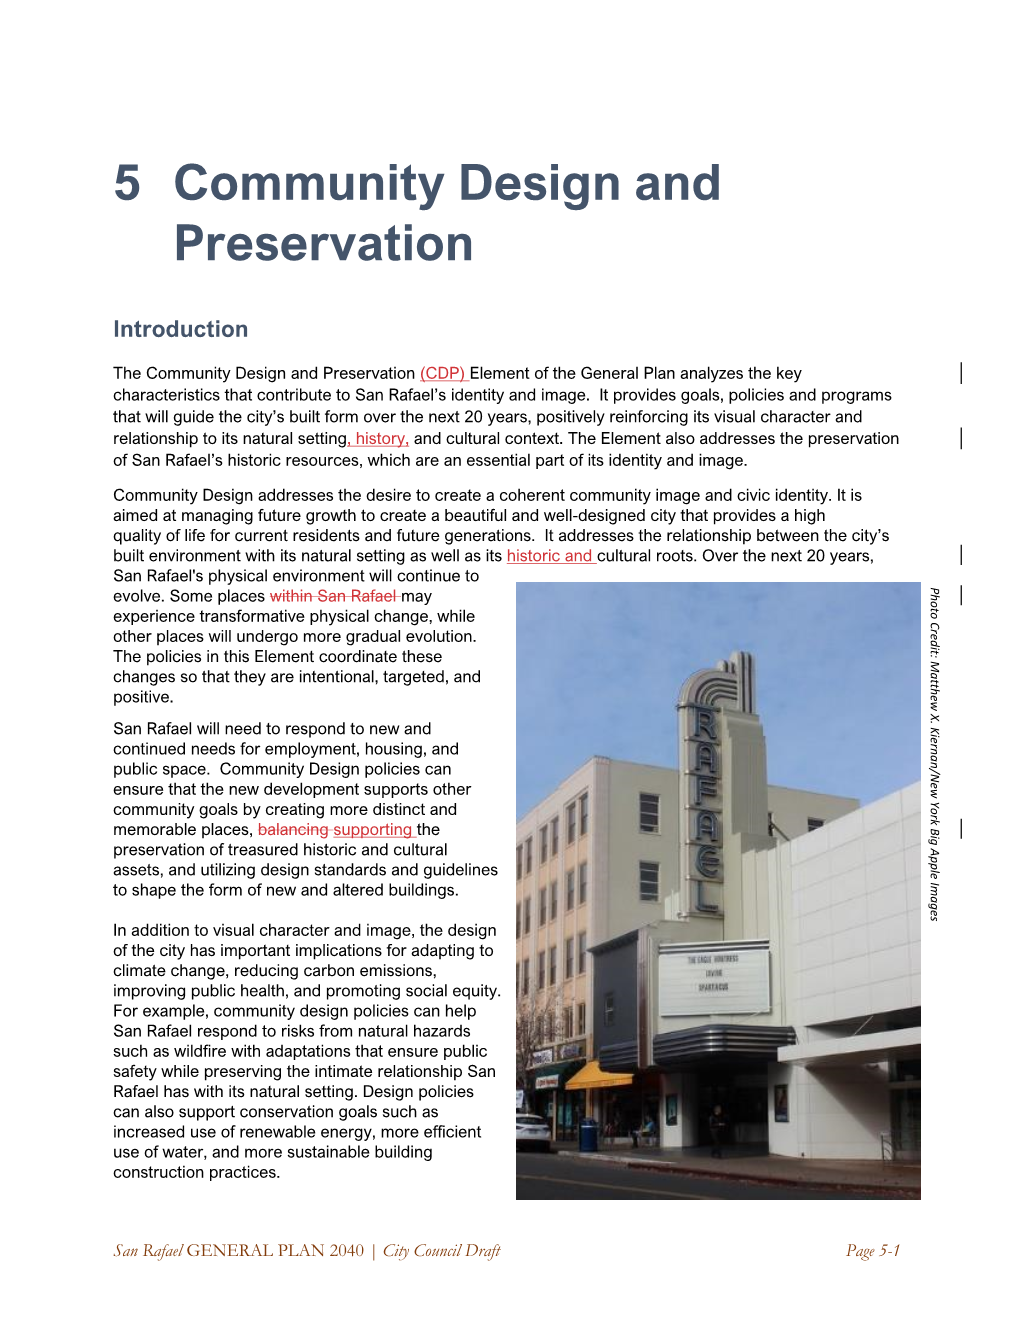 5 Community Design and Preservation